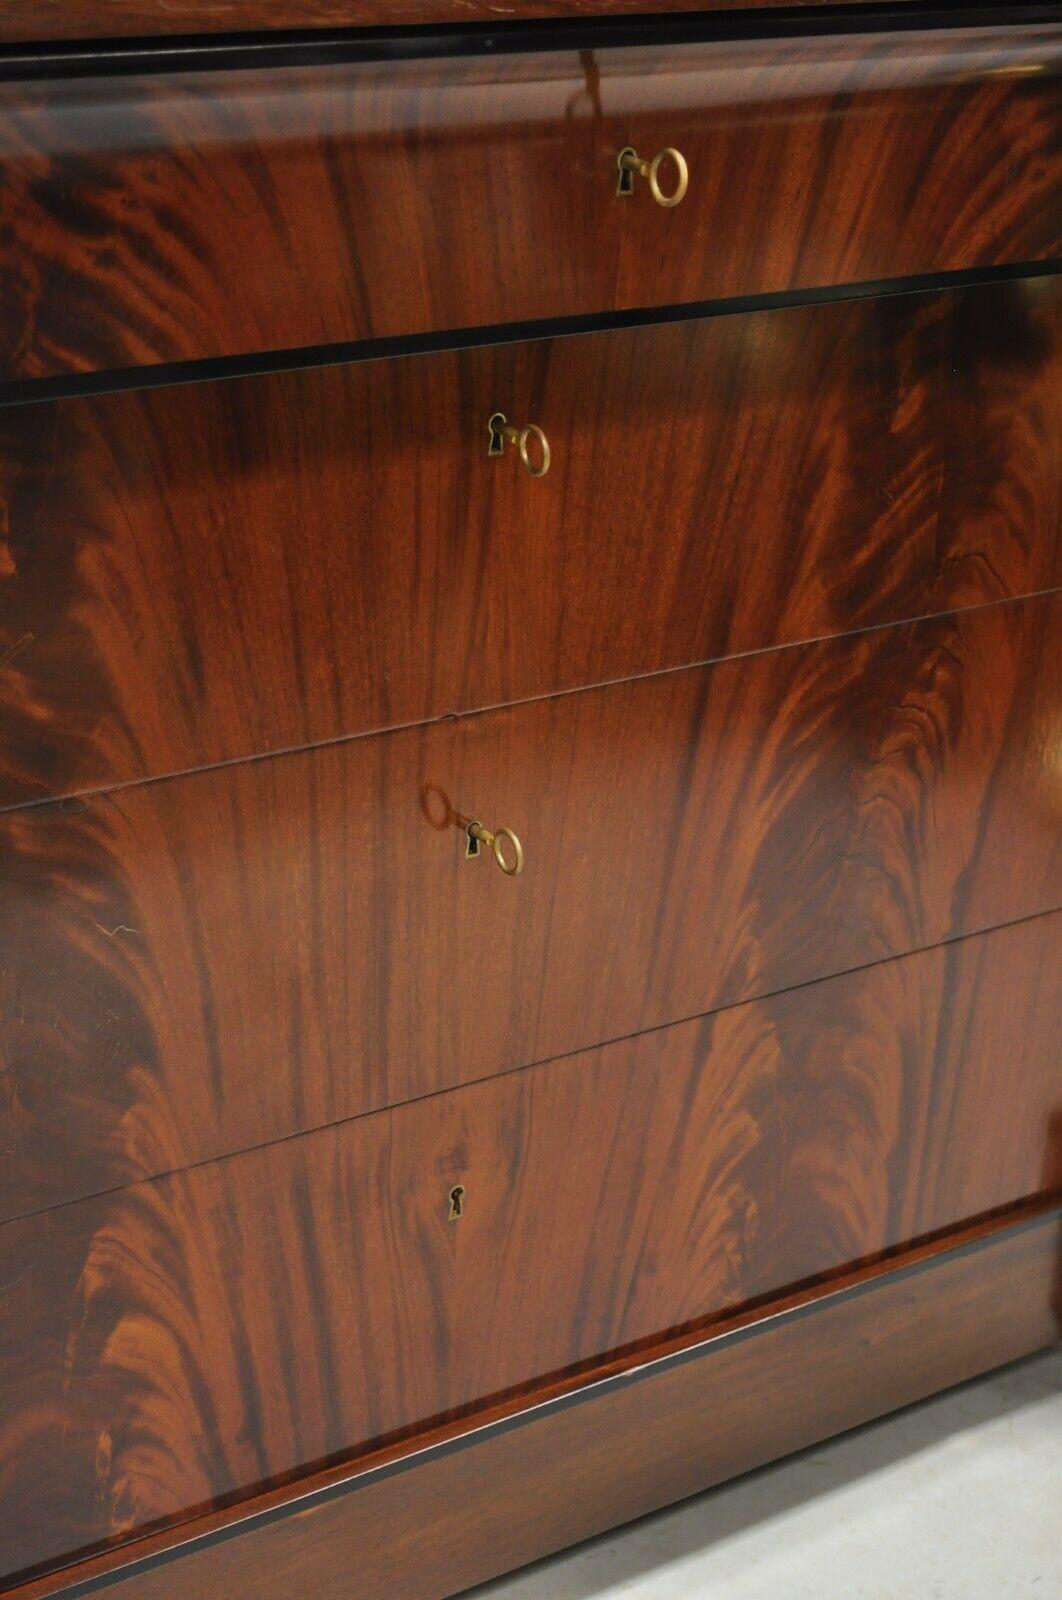 Villa Garnelo Crotch Mahogany Empire Style 4 Drawer Commode Dresser In Good Condition For Sale In Philadelphia, PA